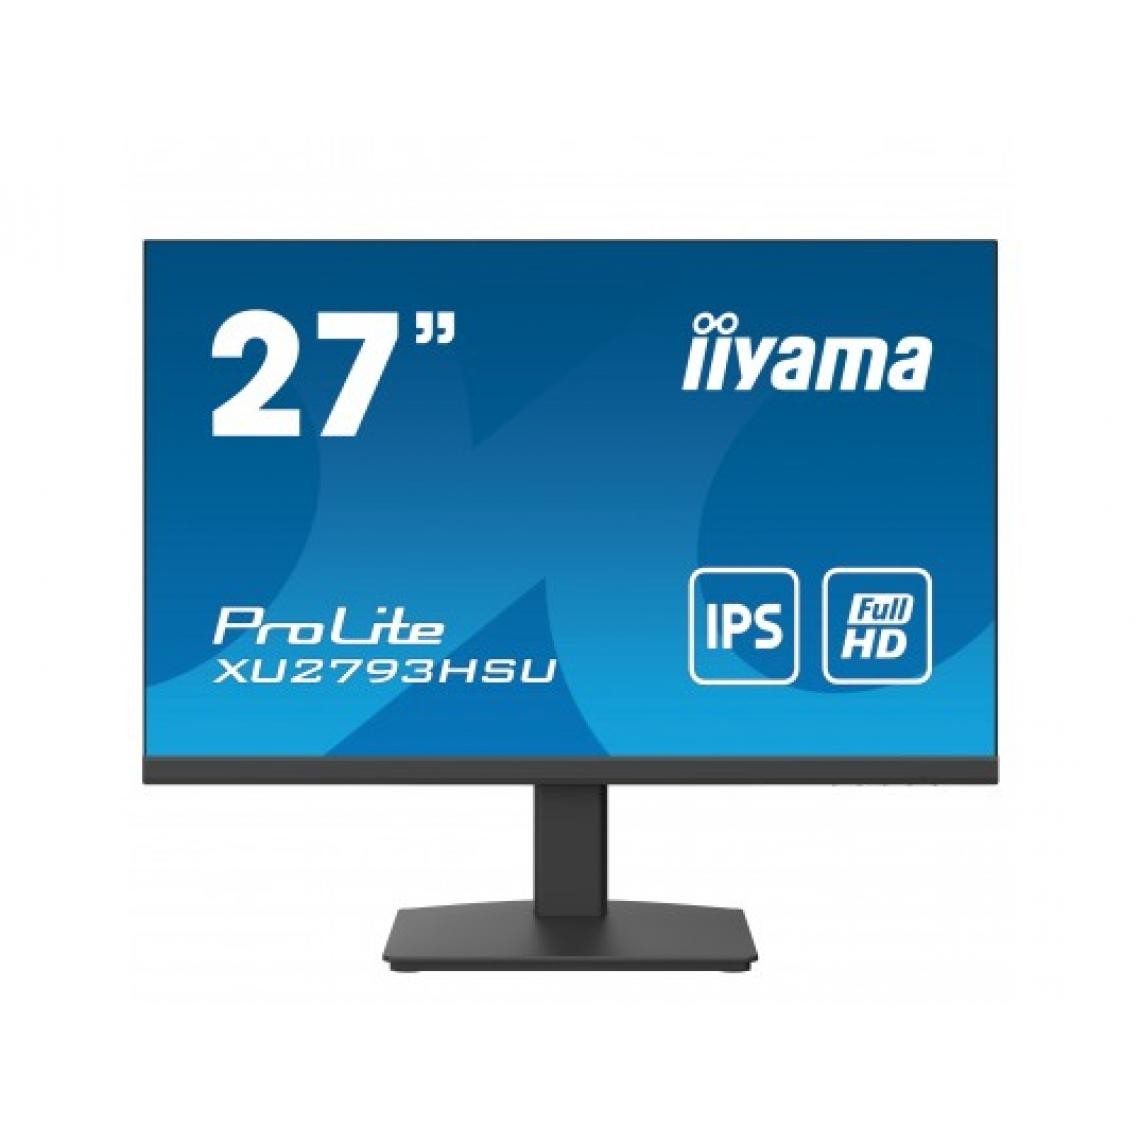 Iiyama - 27" LED Full HD - XU2793HSU-B4 - Moniteur PC